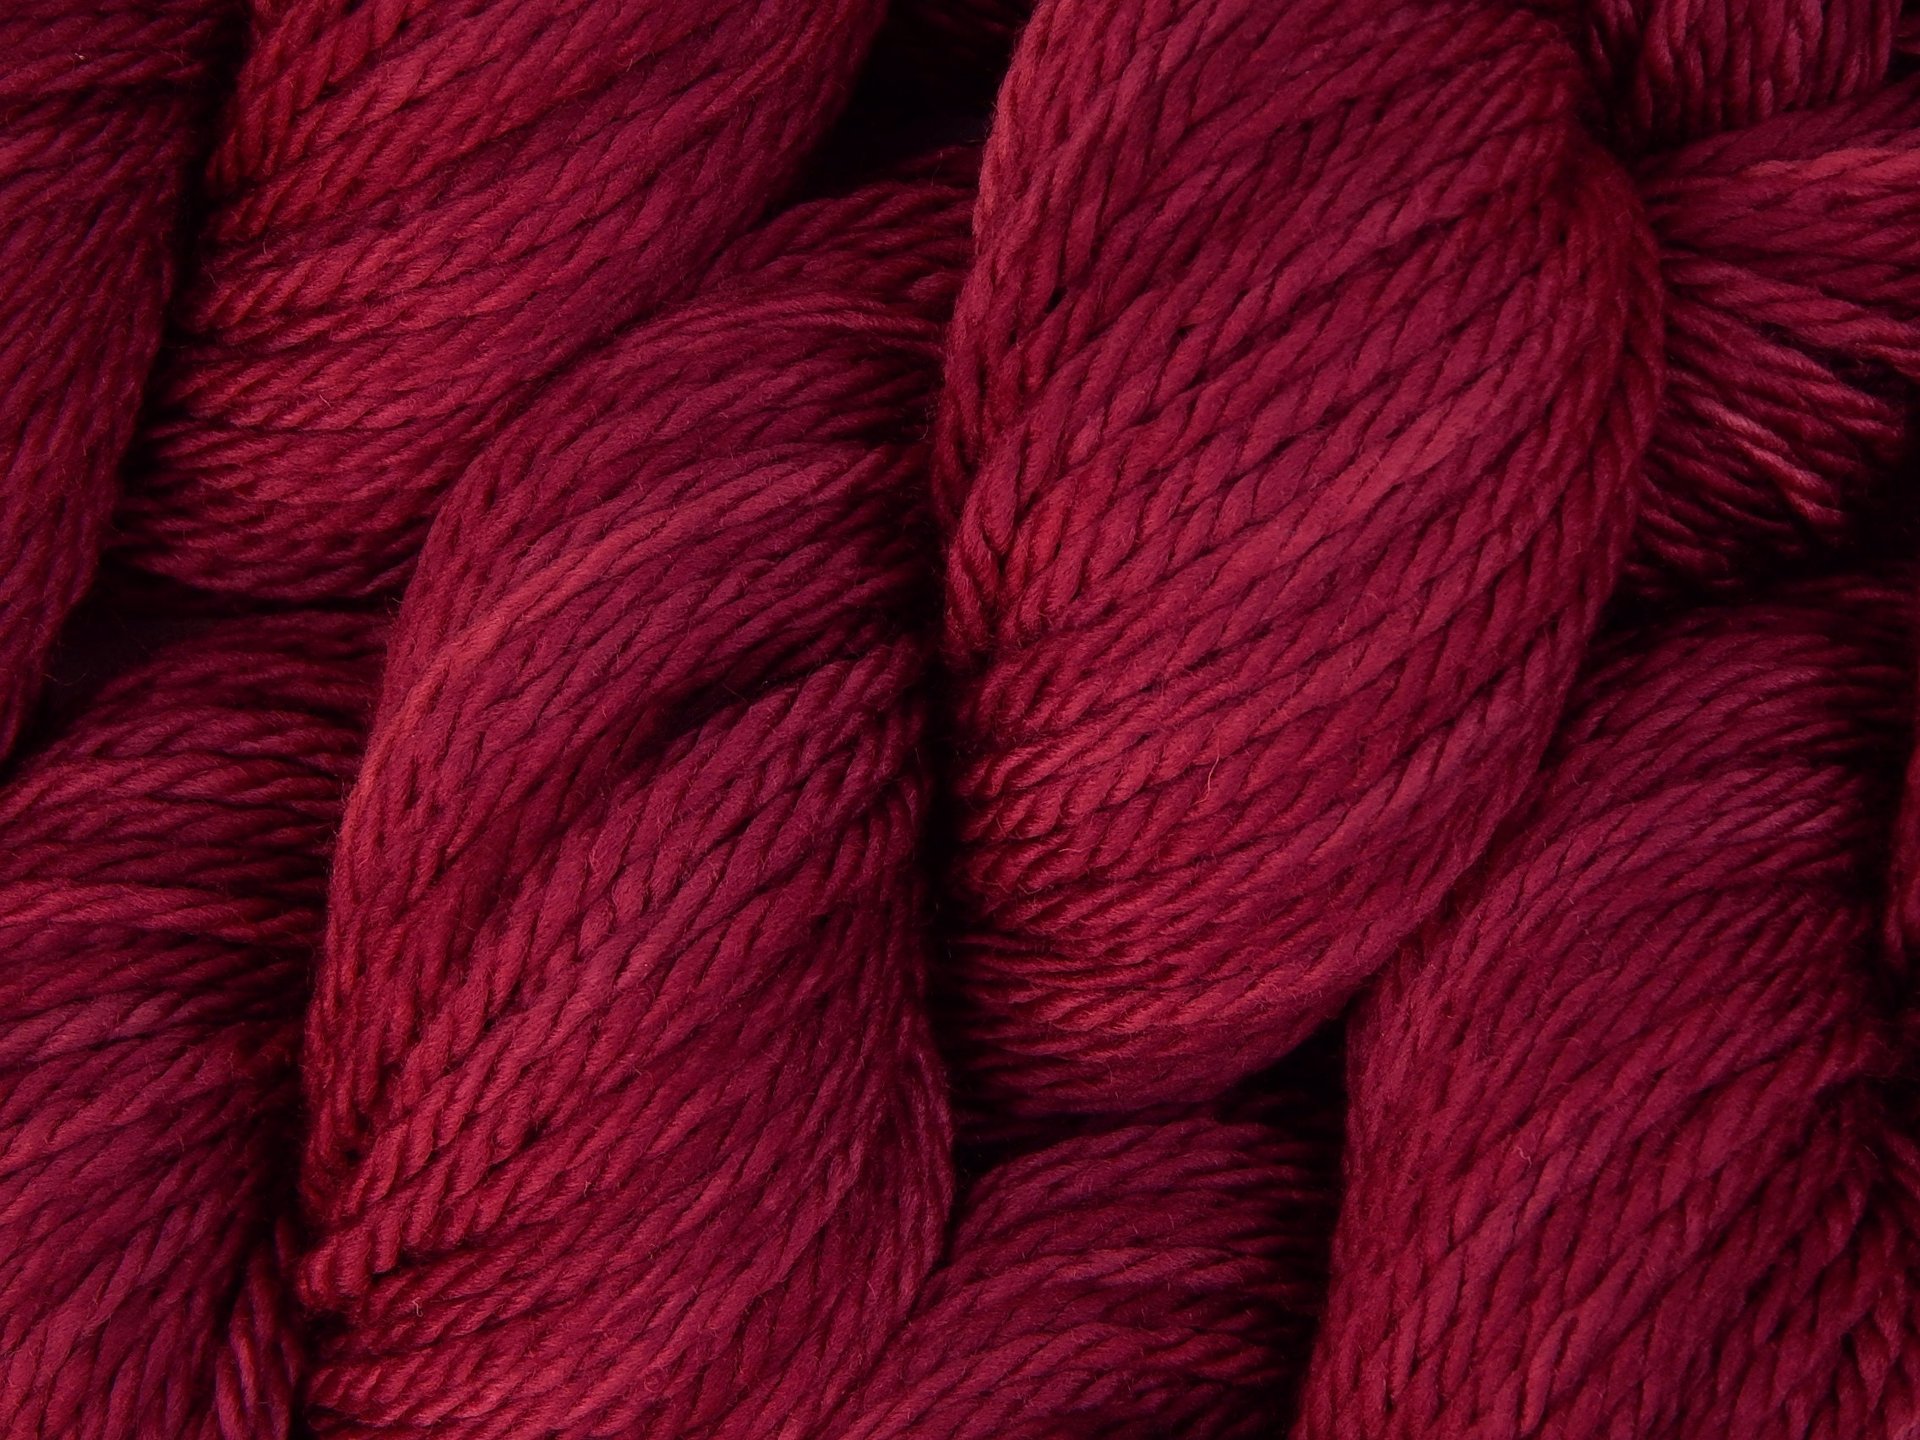 Hand Dyed Yarn, Bulky Weight 100% Superwash Merino Wool - Plumberry - Indie Dyer Berry Red Thick Chunky Knitting Yarn